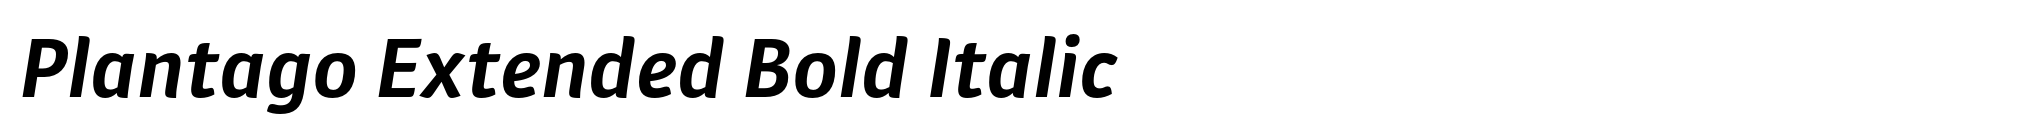 Plantago Extended Bold Italic image